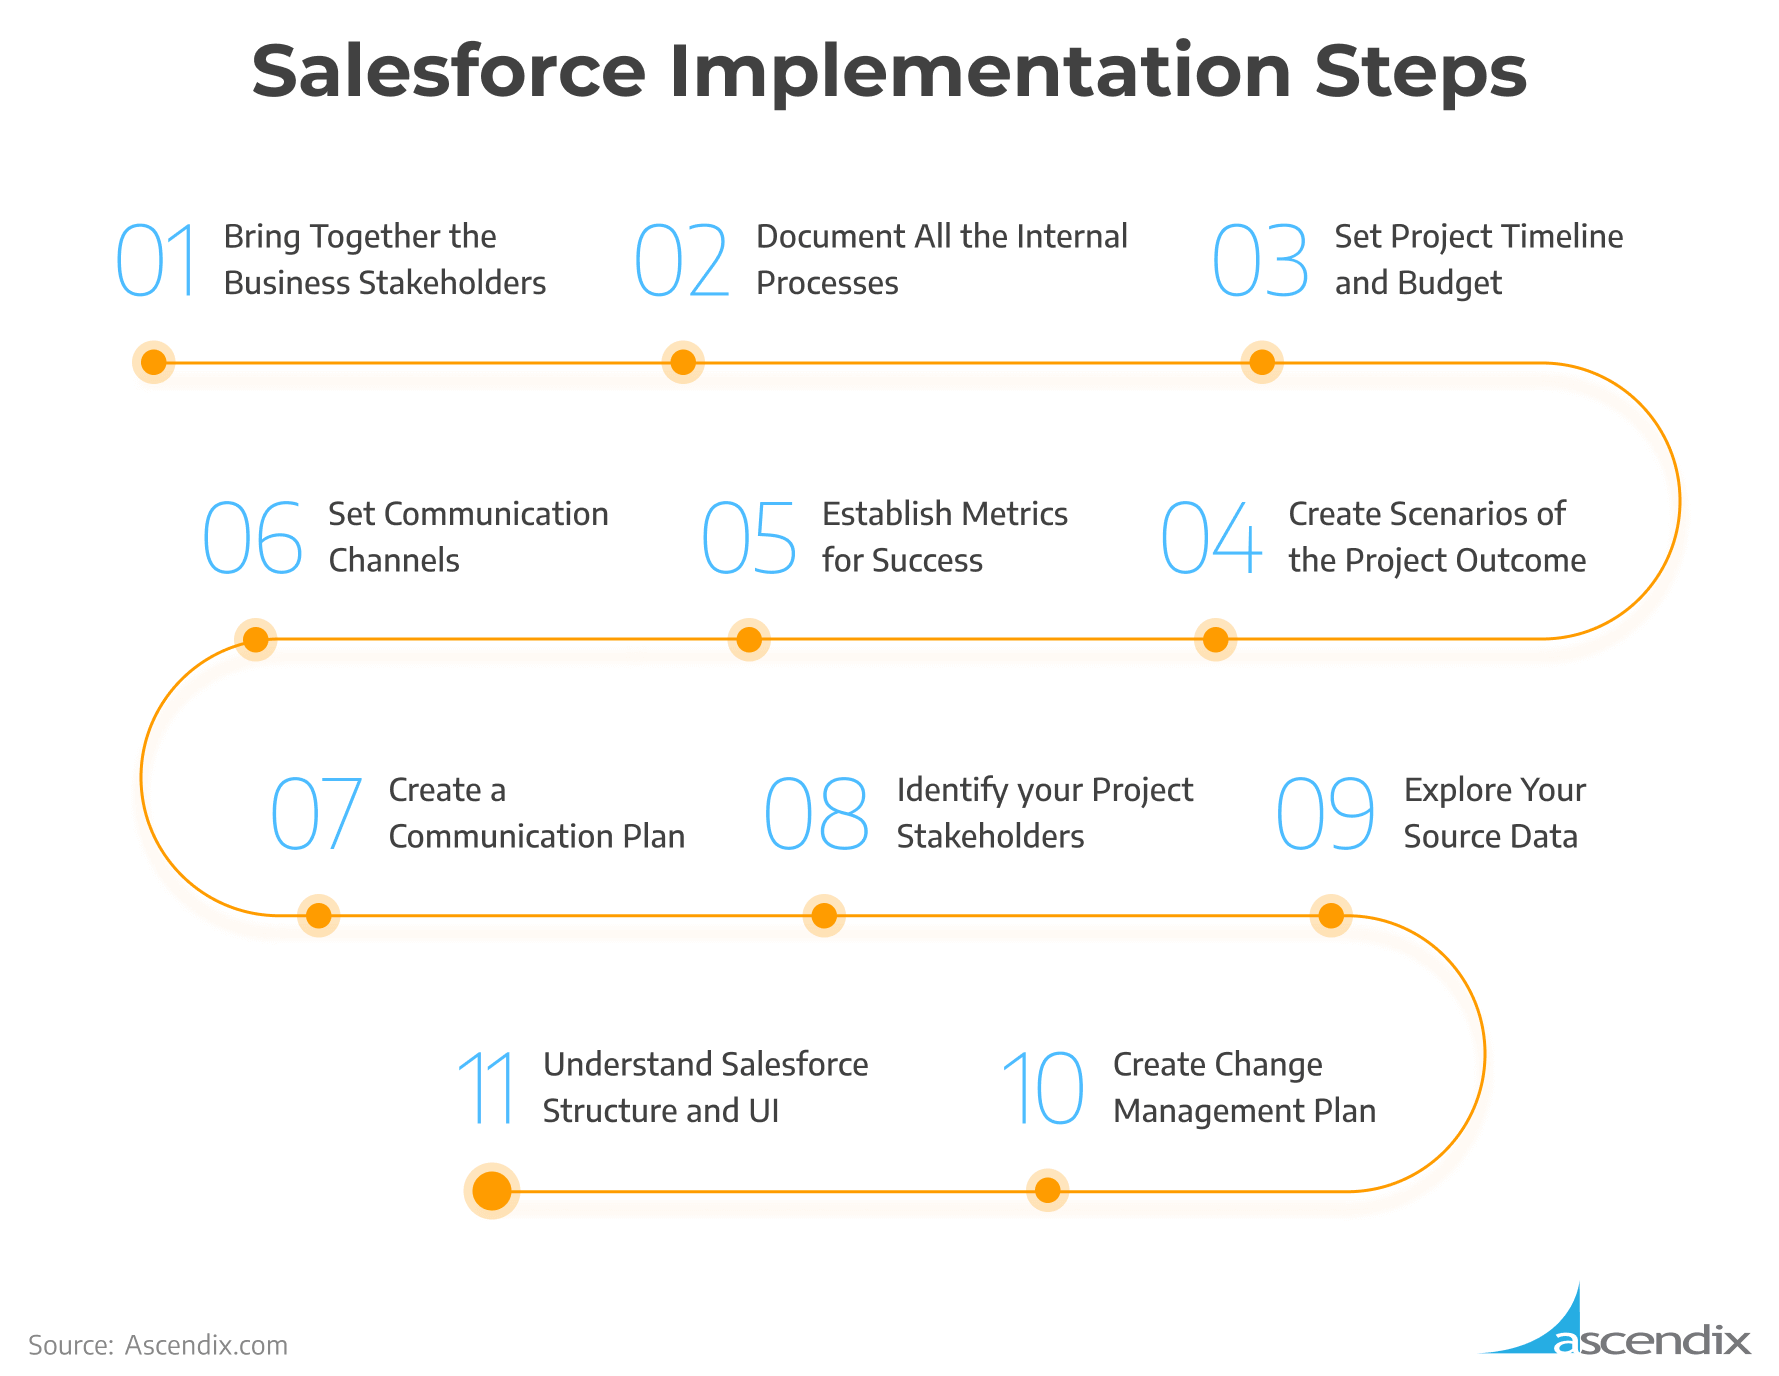 Salesforce Implementation Steps | Ascendix